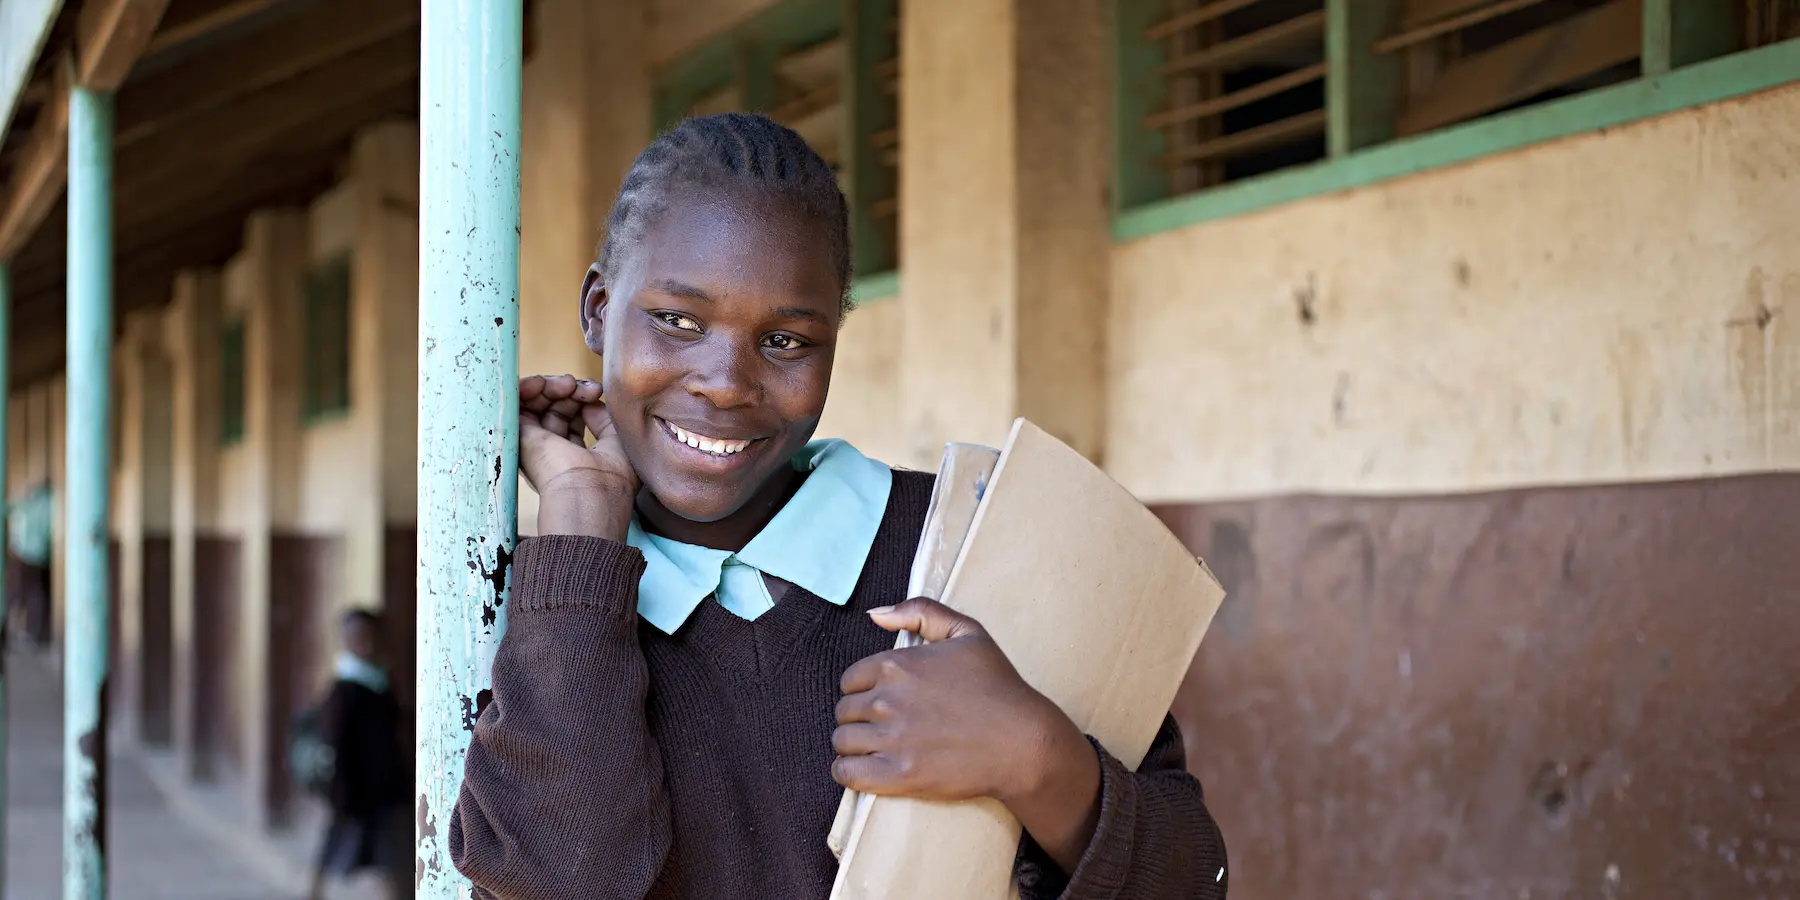 A girl attends school in Nairobi, Kenya